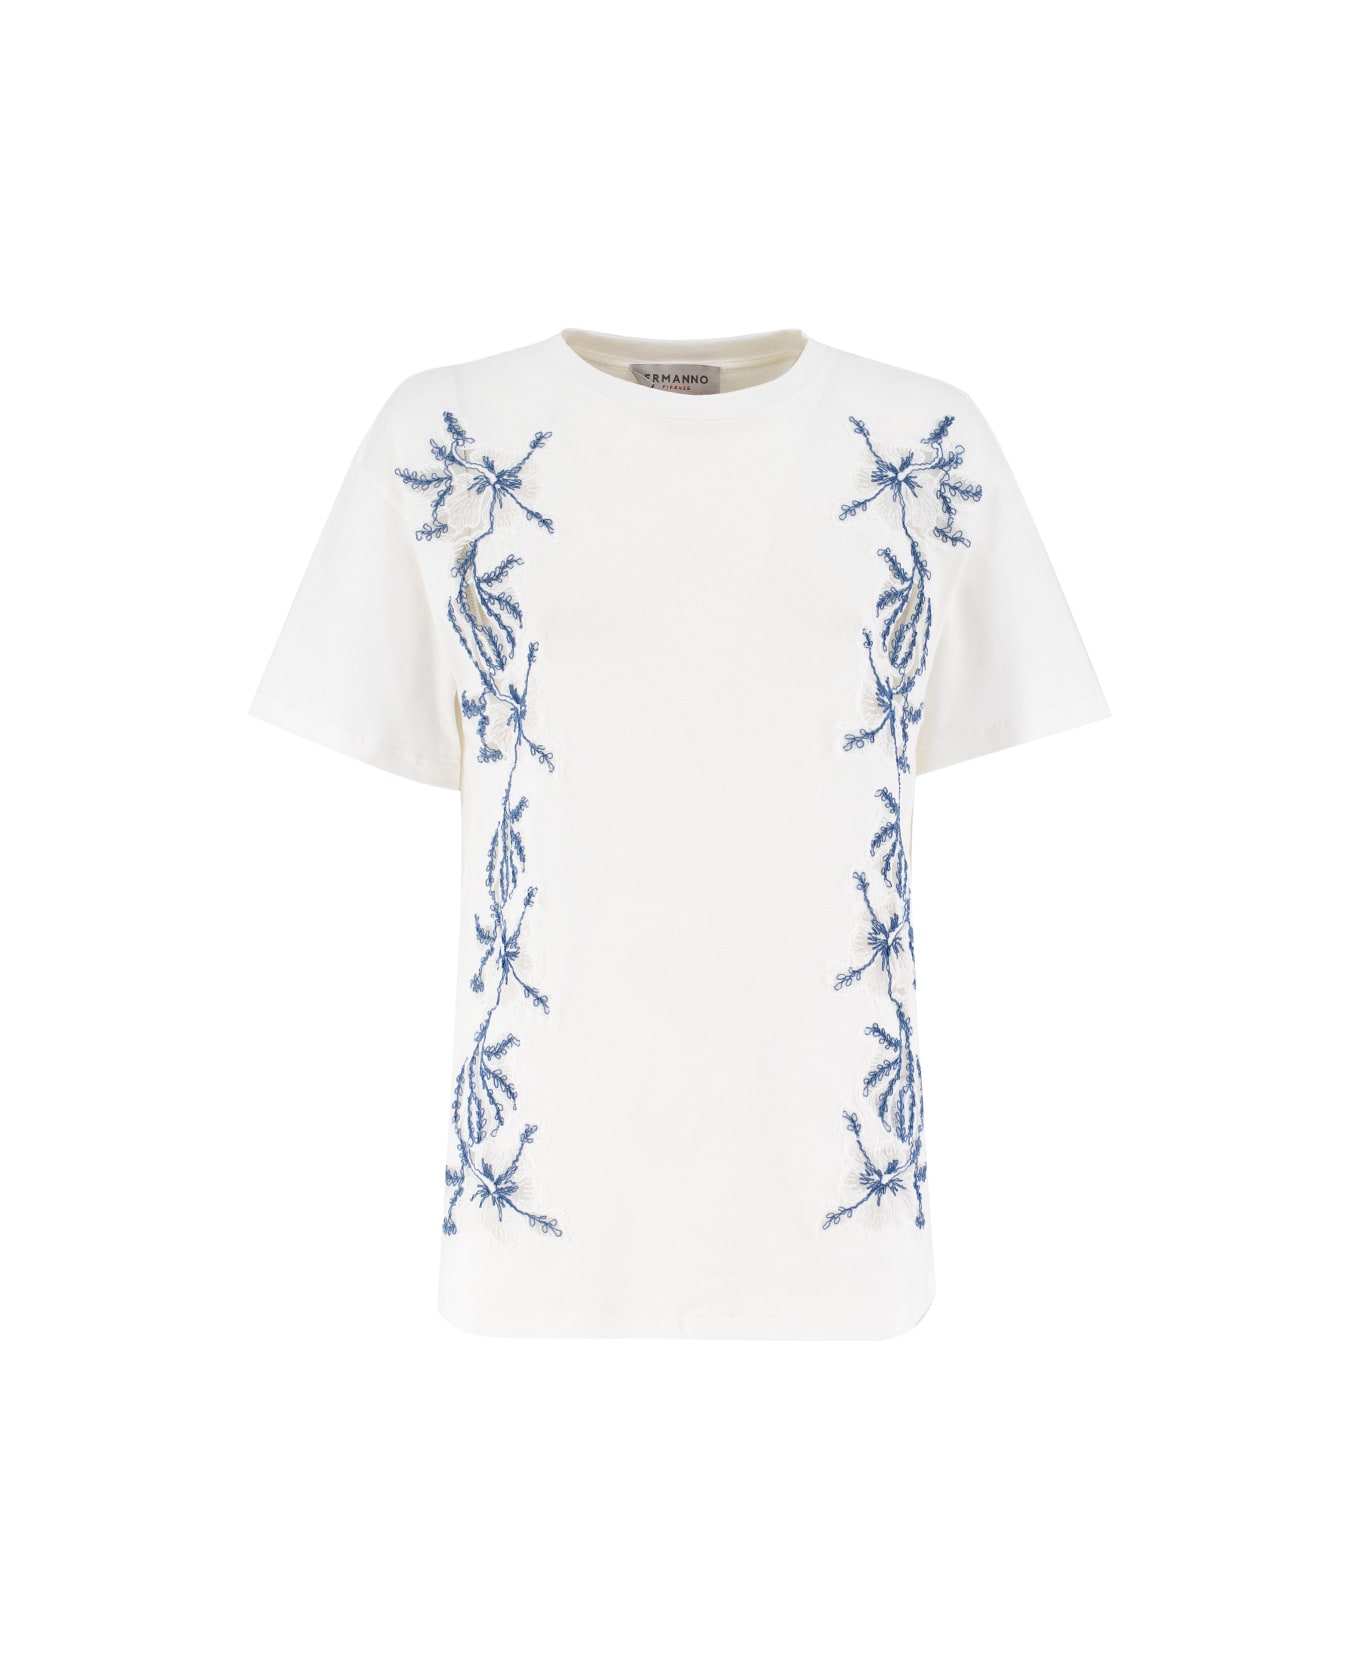 Ermanno Firenze T-shirt - OFF WHITE/LIGHT BLUE Tシャツ